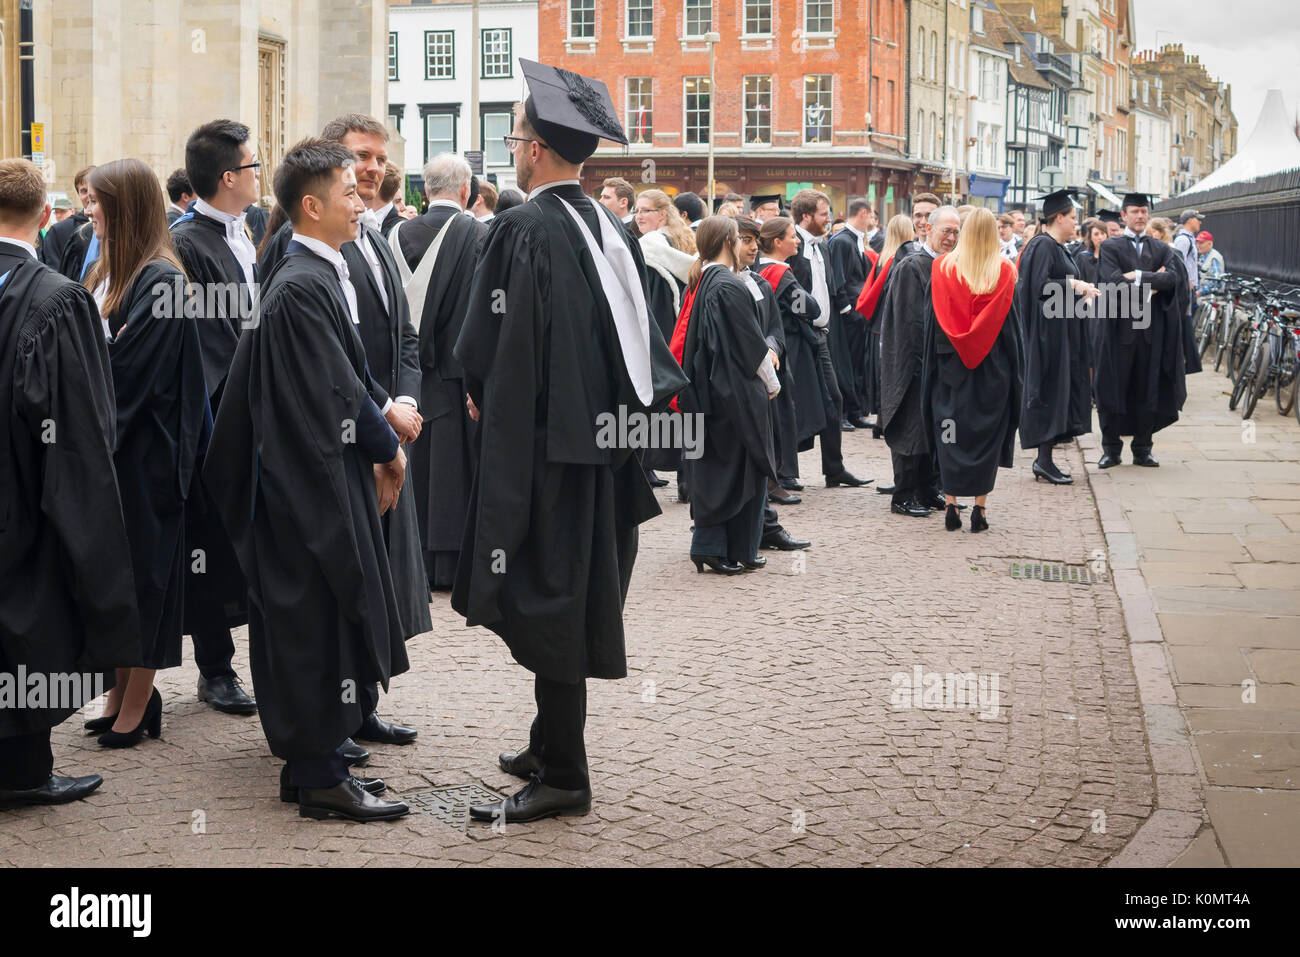 Students graduation UK, undergraduates assemble outside the Cambridge University Senate House prior to their graduation ceremony, England. Stock Photo